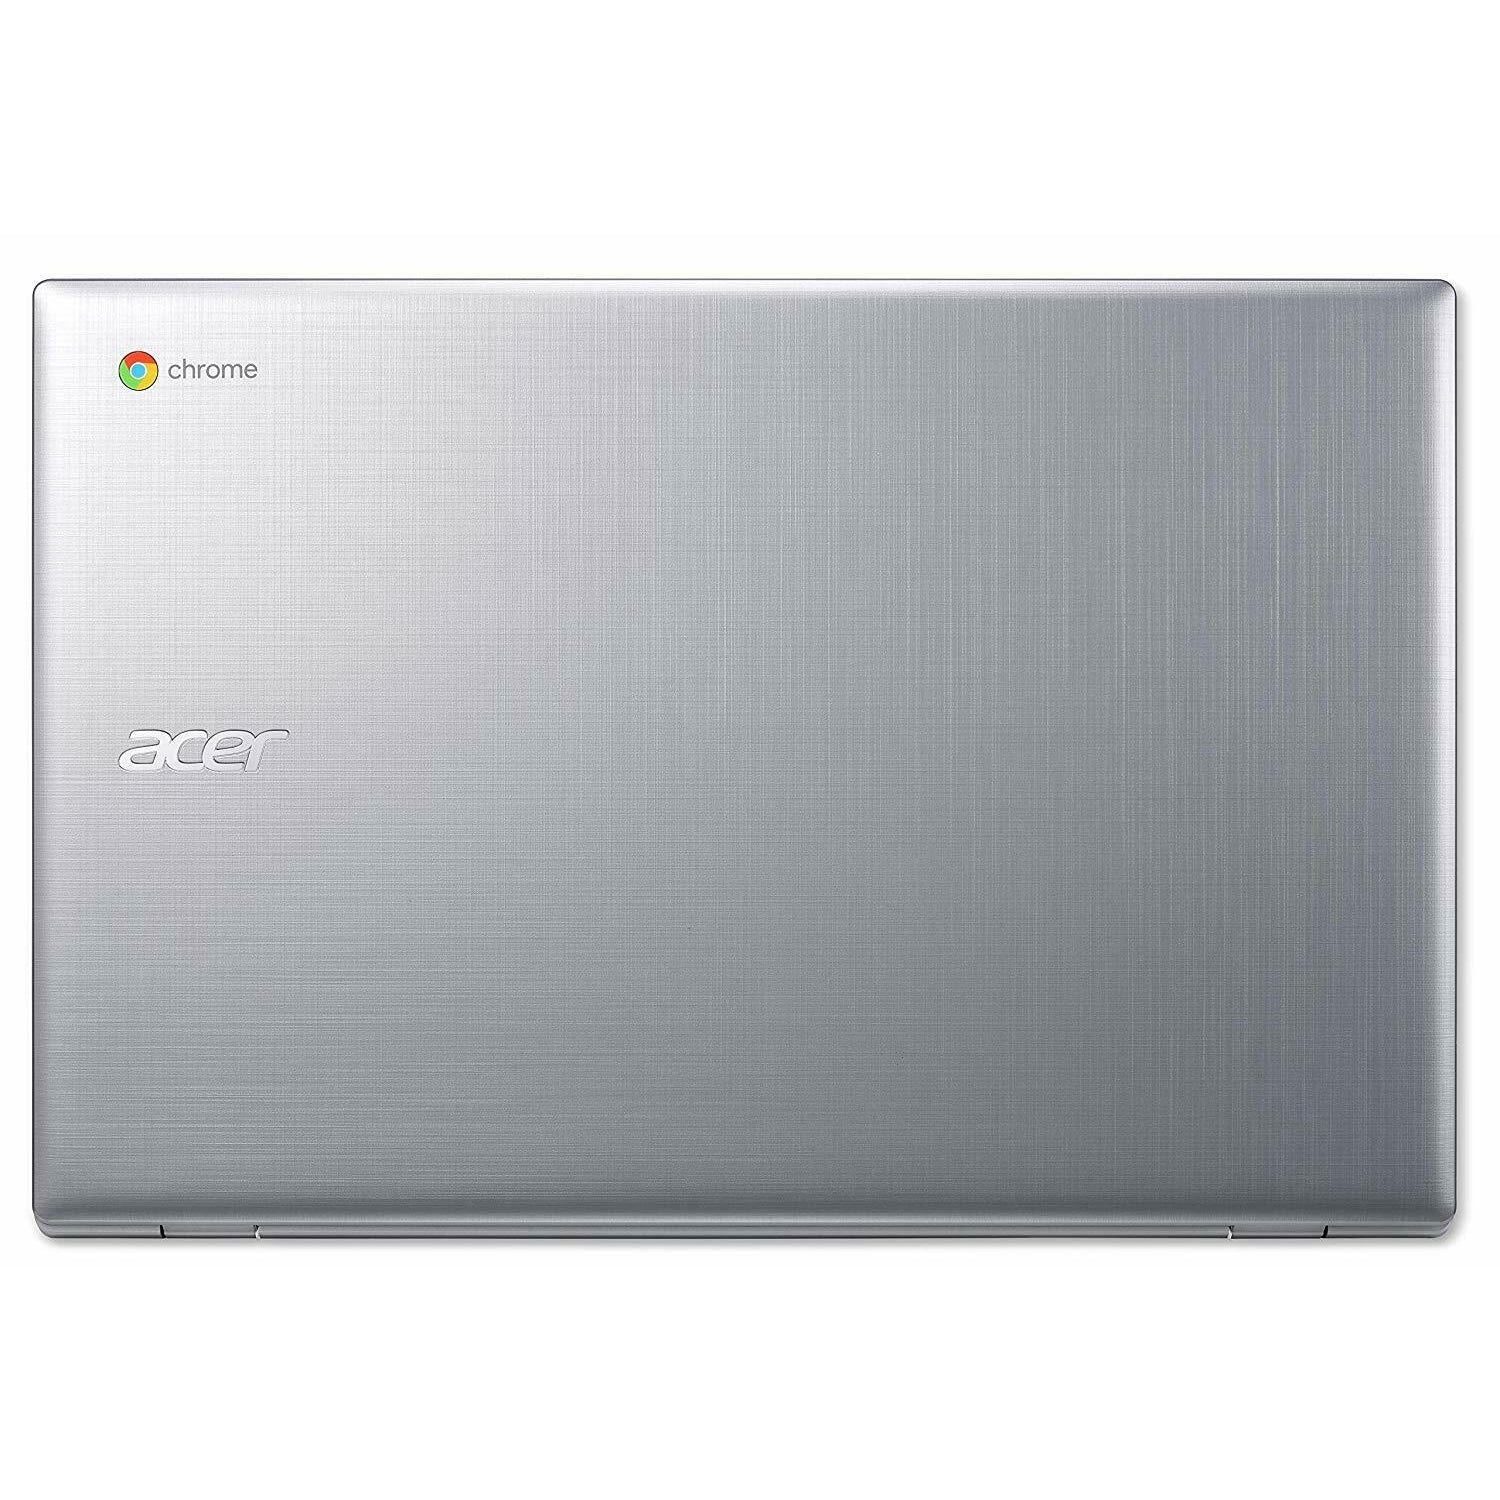 Acer CB315-2H-66VC, AMD A6-9220C, 4GB RAM, 64GB HDD, 15.6" Silver (NX.H8SEK.003) - Refurbished Good